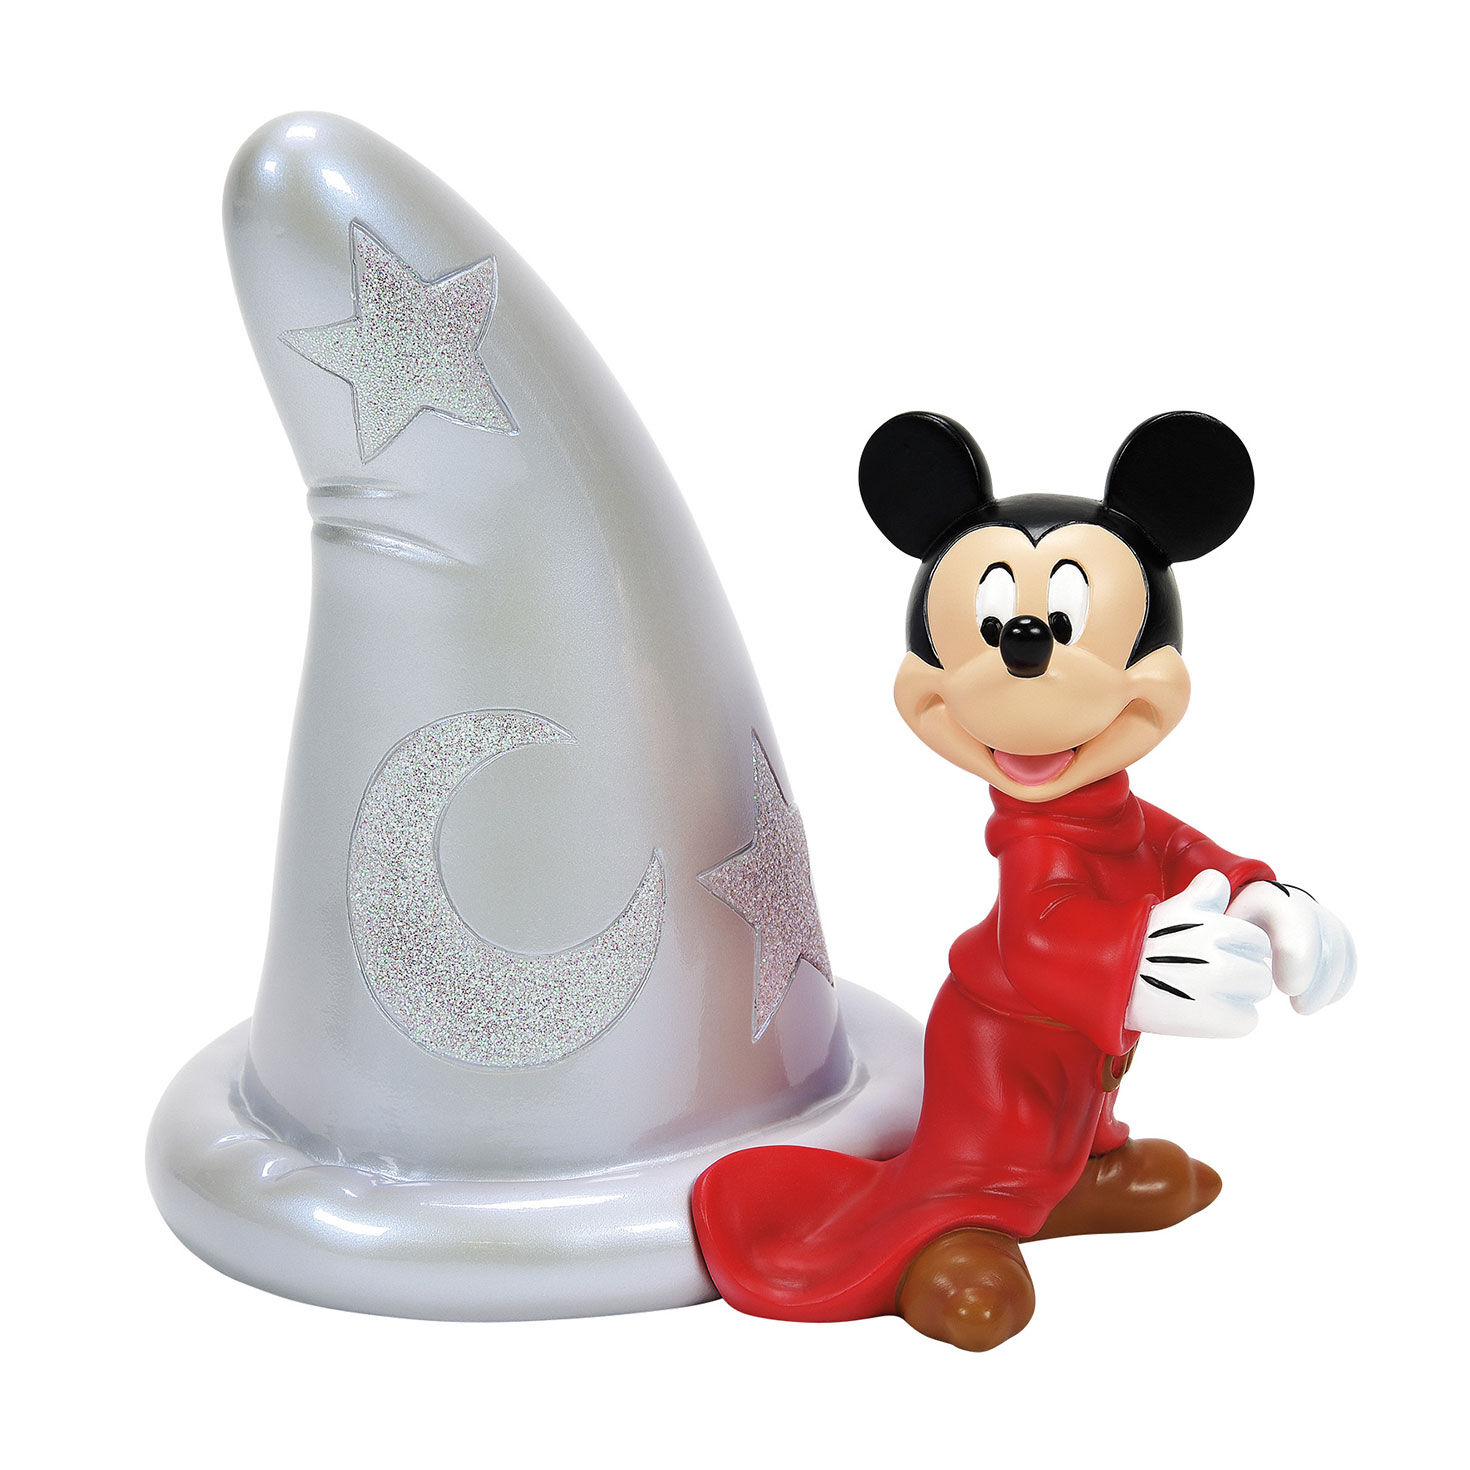 https://www.hallmark.com/dw/image/v2/AALB_PRD/on/demandware.static/-/Sites-hallmark-master/default/dw07e8f20c/images/finished-goods/products/6013124/Disney-Sorcerers-Apprentice-Mickey-Mouse_6013124_01.jpg?sfrm=jpg